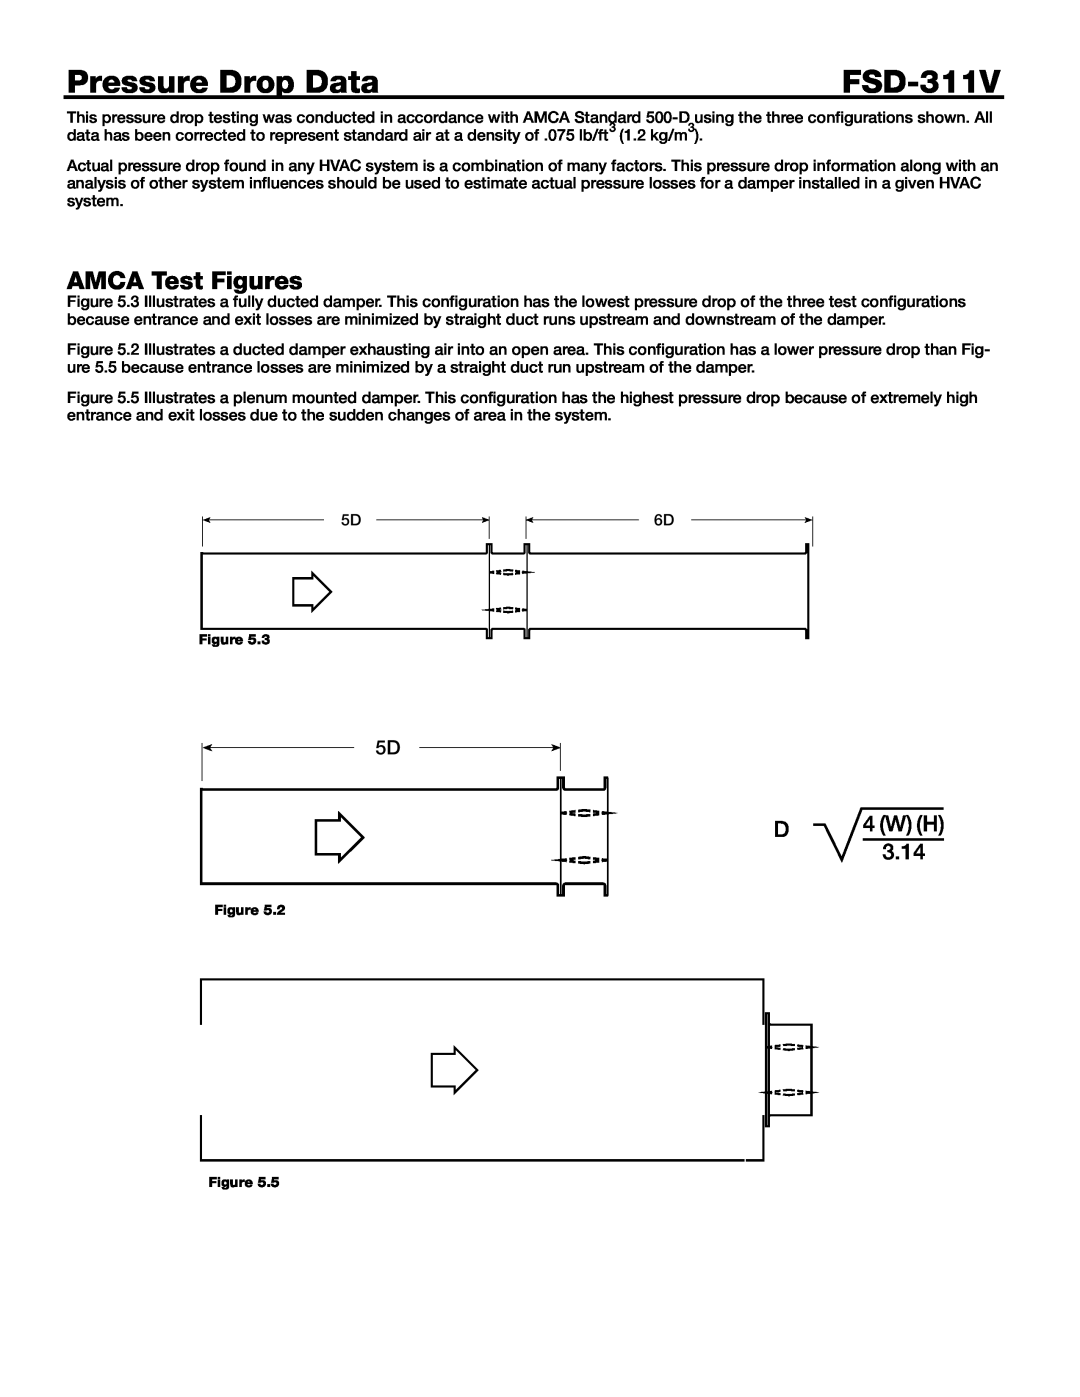 Greenheck Fan FSD-311V installation instructions Pressure Drop Data, 4 W H, AMCA Test Figures, 3.14 